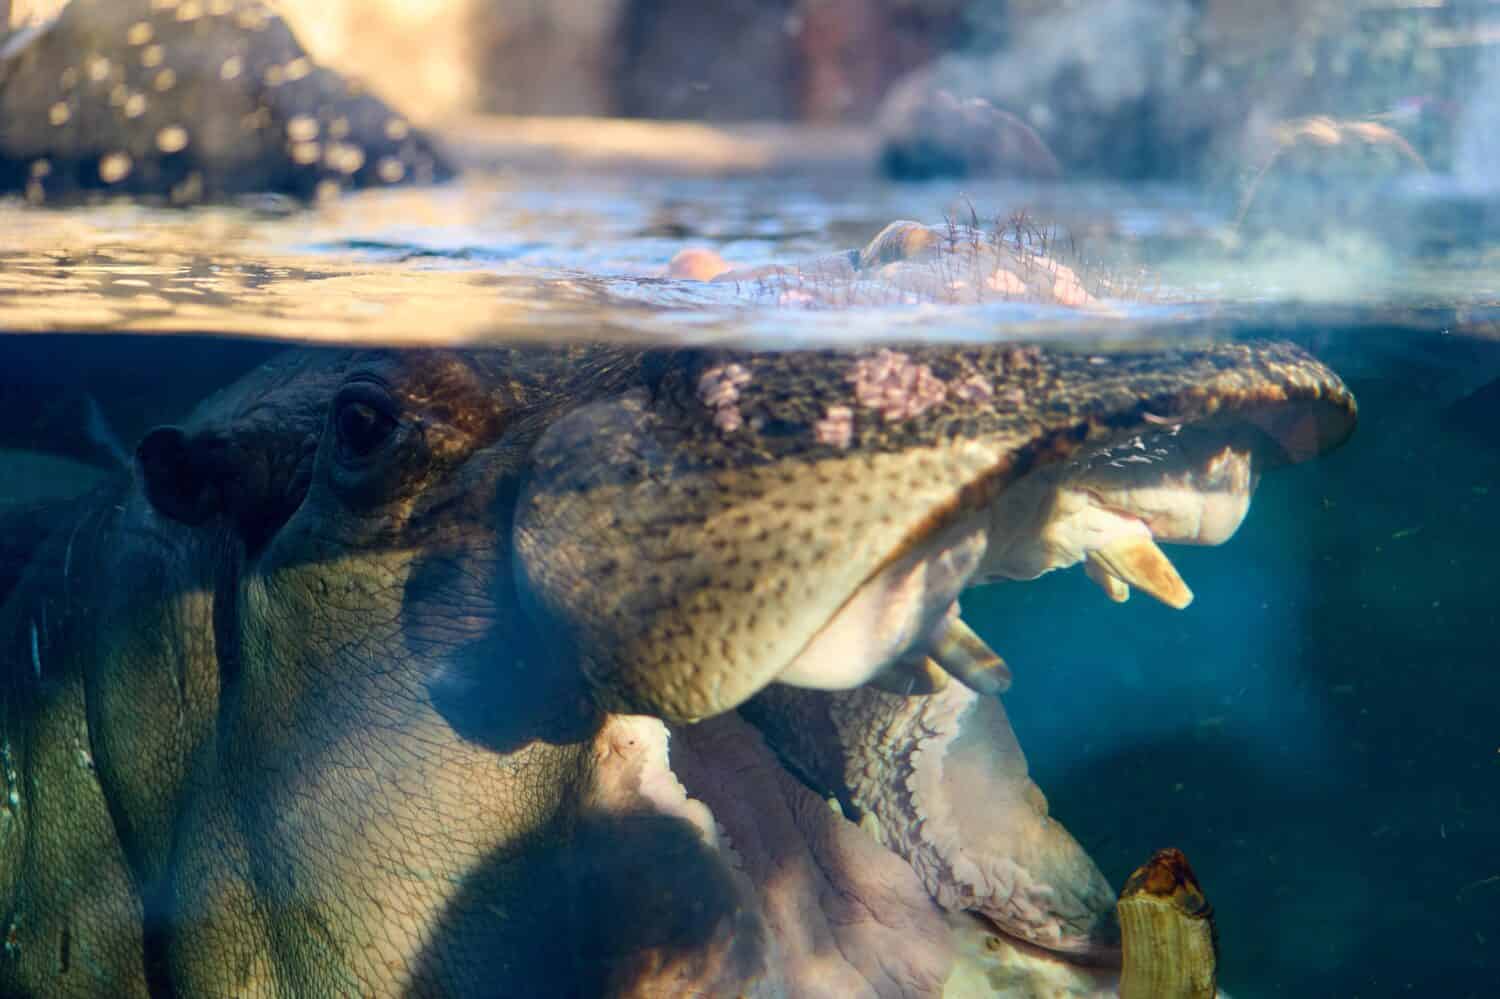 A closeup shot of a hippo under the water at the Cincinnati zoo